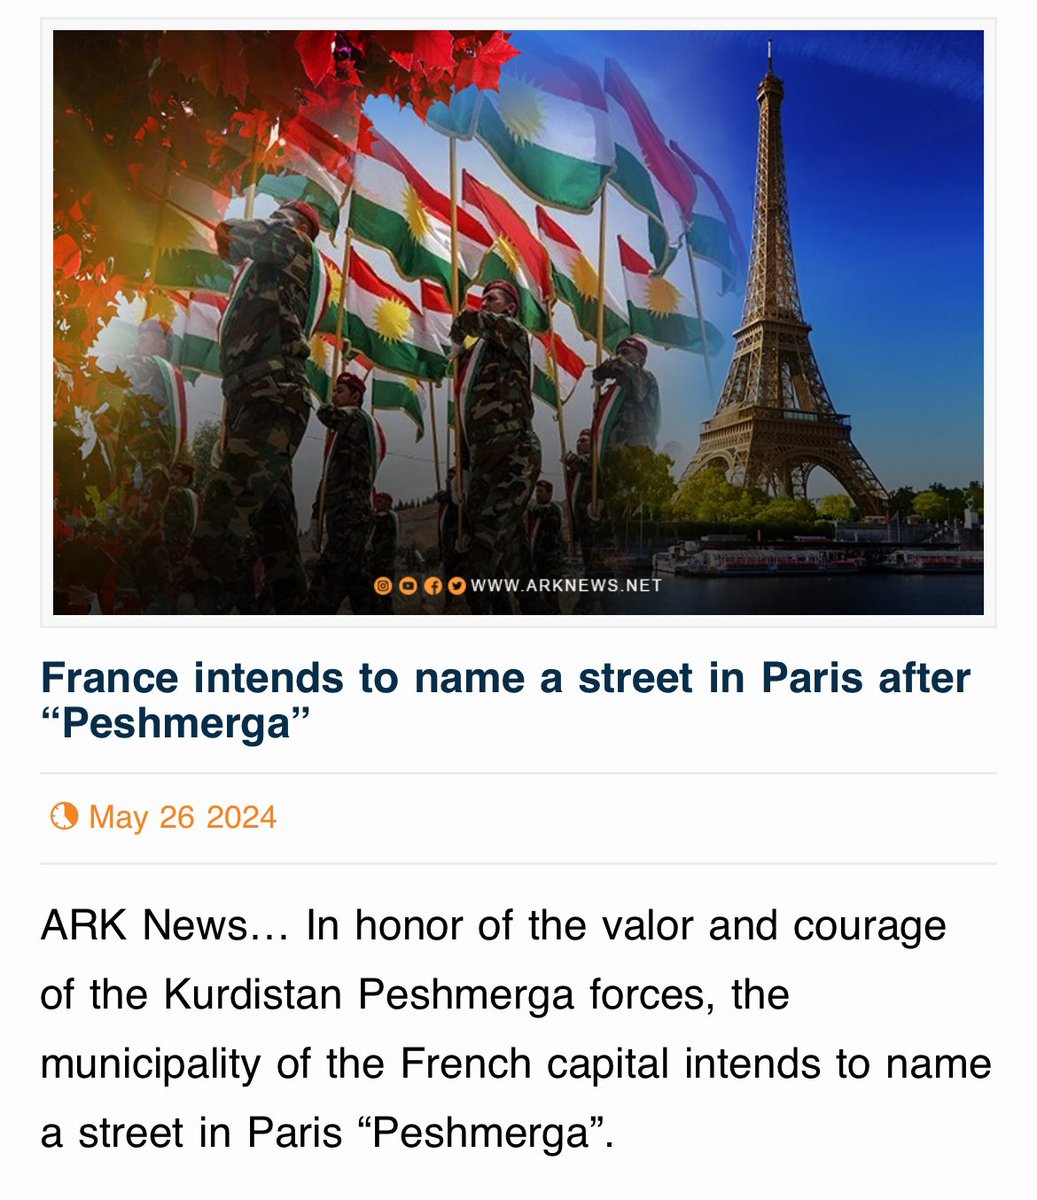 بەخێر بێن بۆ شەقامی پێشمەرگە لە پاریس.

به خیابان پیشمرگه در پاریس خوش آمدید. 

France intends to name one of 
the streets in Paris “Rue Peshmerga” in honor of the bravery of Kurdish forces fighting ISIS.